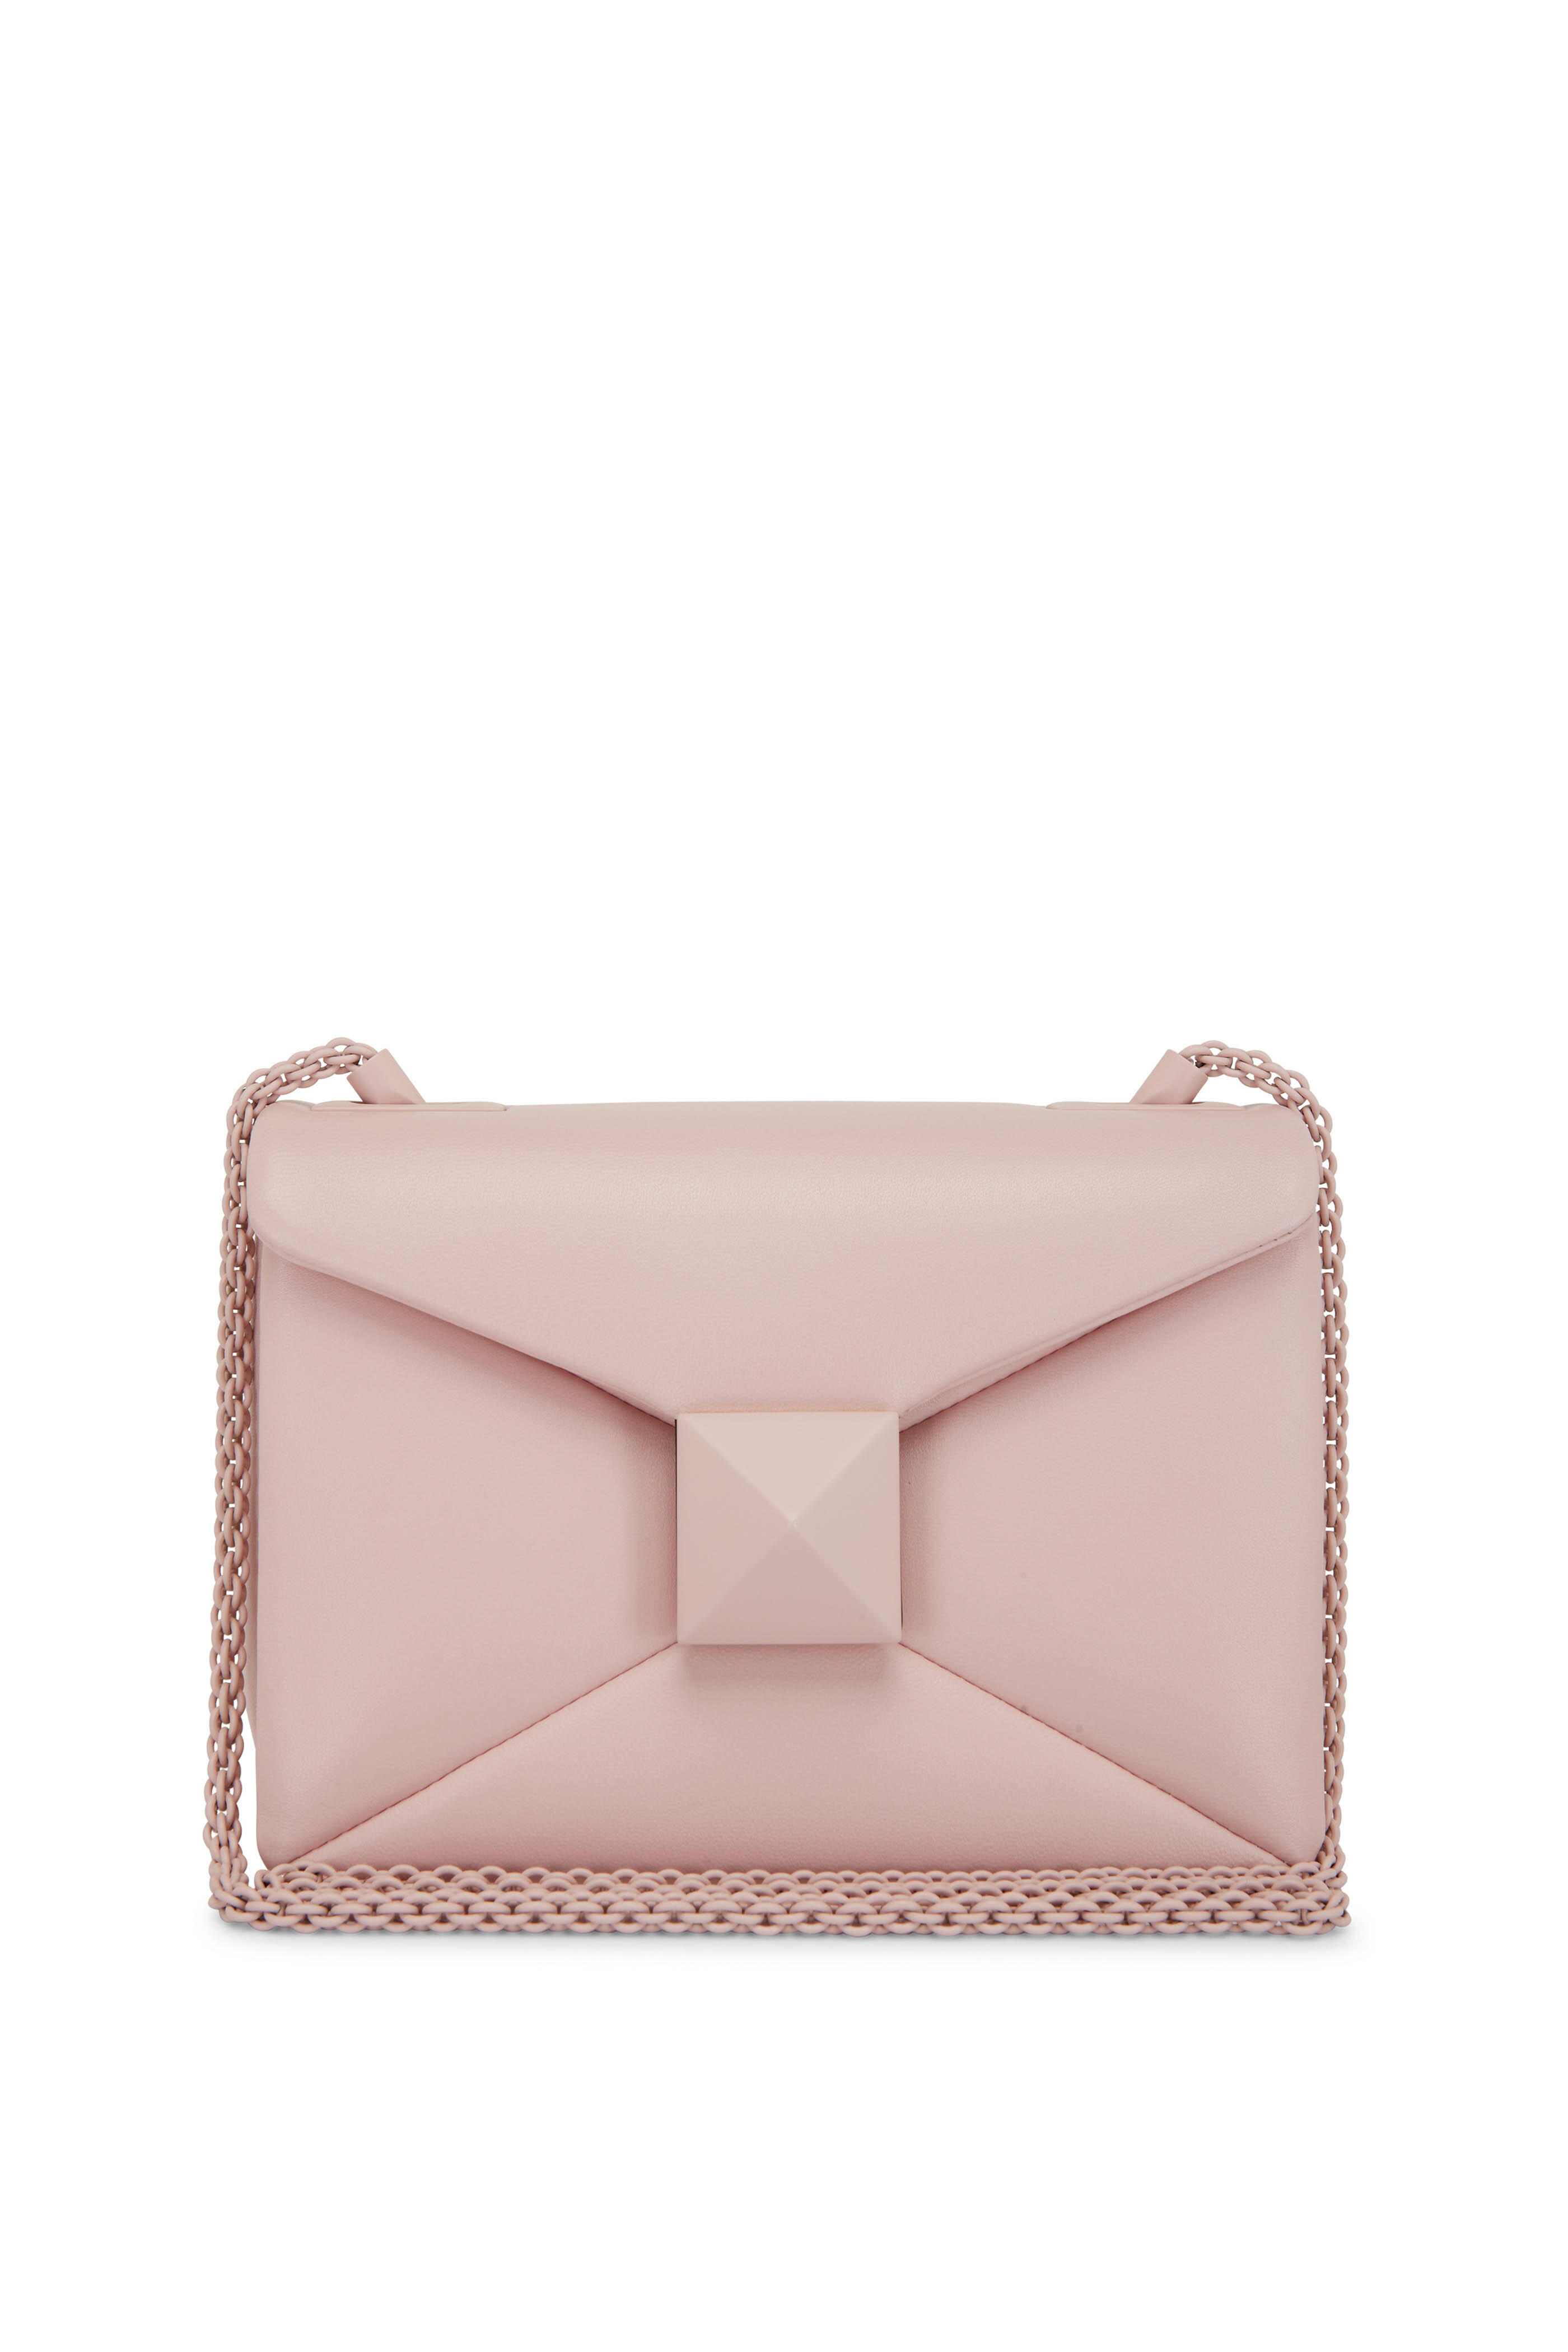 Valentino Garavani One Stud leather handbag Pink, Crossbody Bag